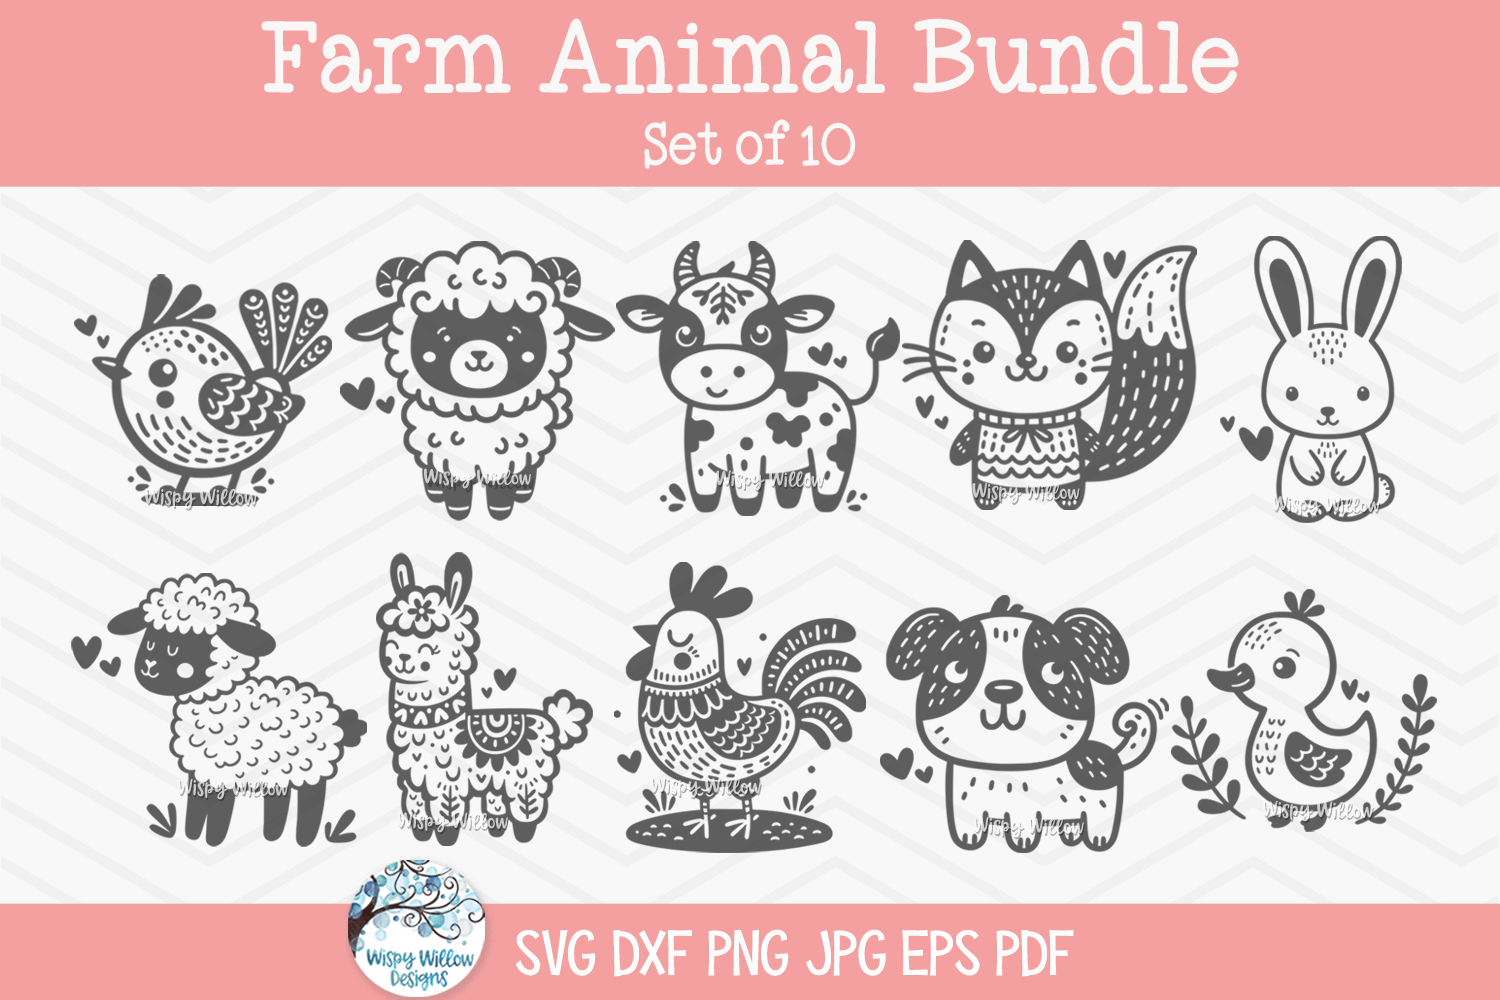 Farm Animal Bundle SVG | Baby Shower Designs - Cat, Bunny Rabbit, Duck, Chicken, Rooster, Llama, Sheep, Cow, Lamb, Dog, Goat Wispy Willow Designs Company